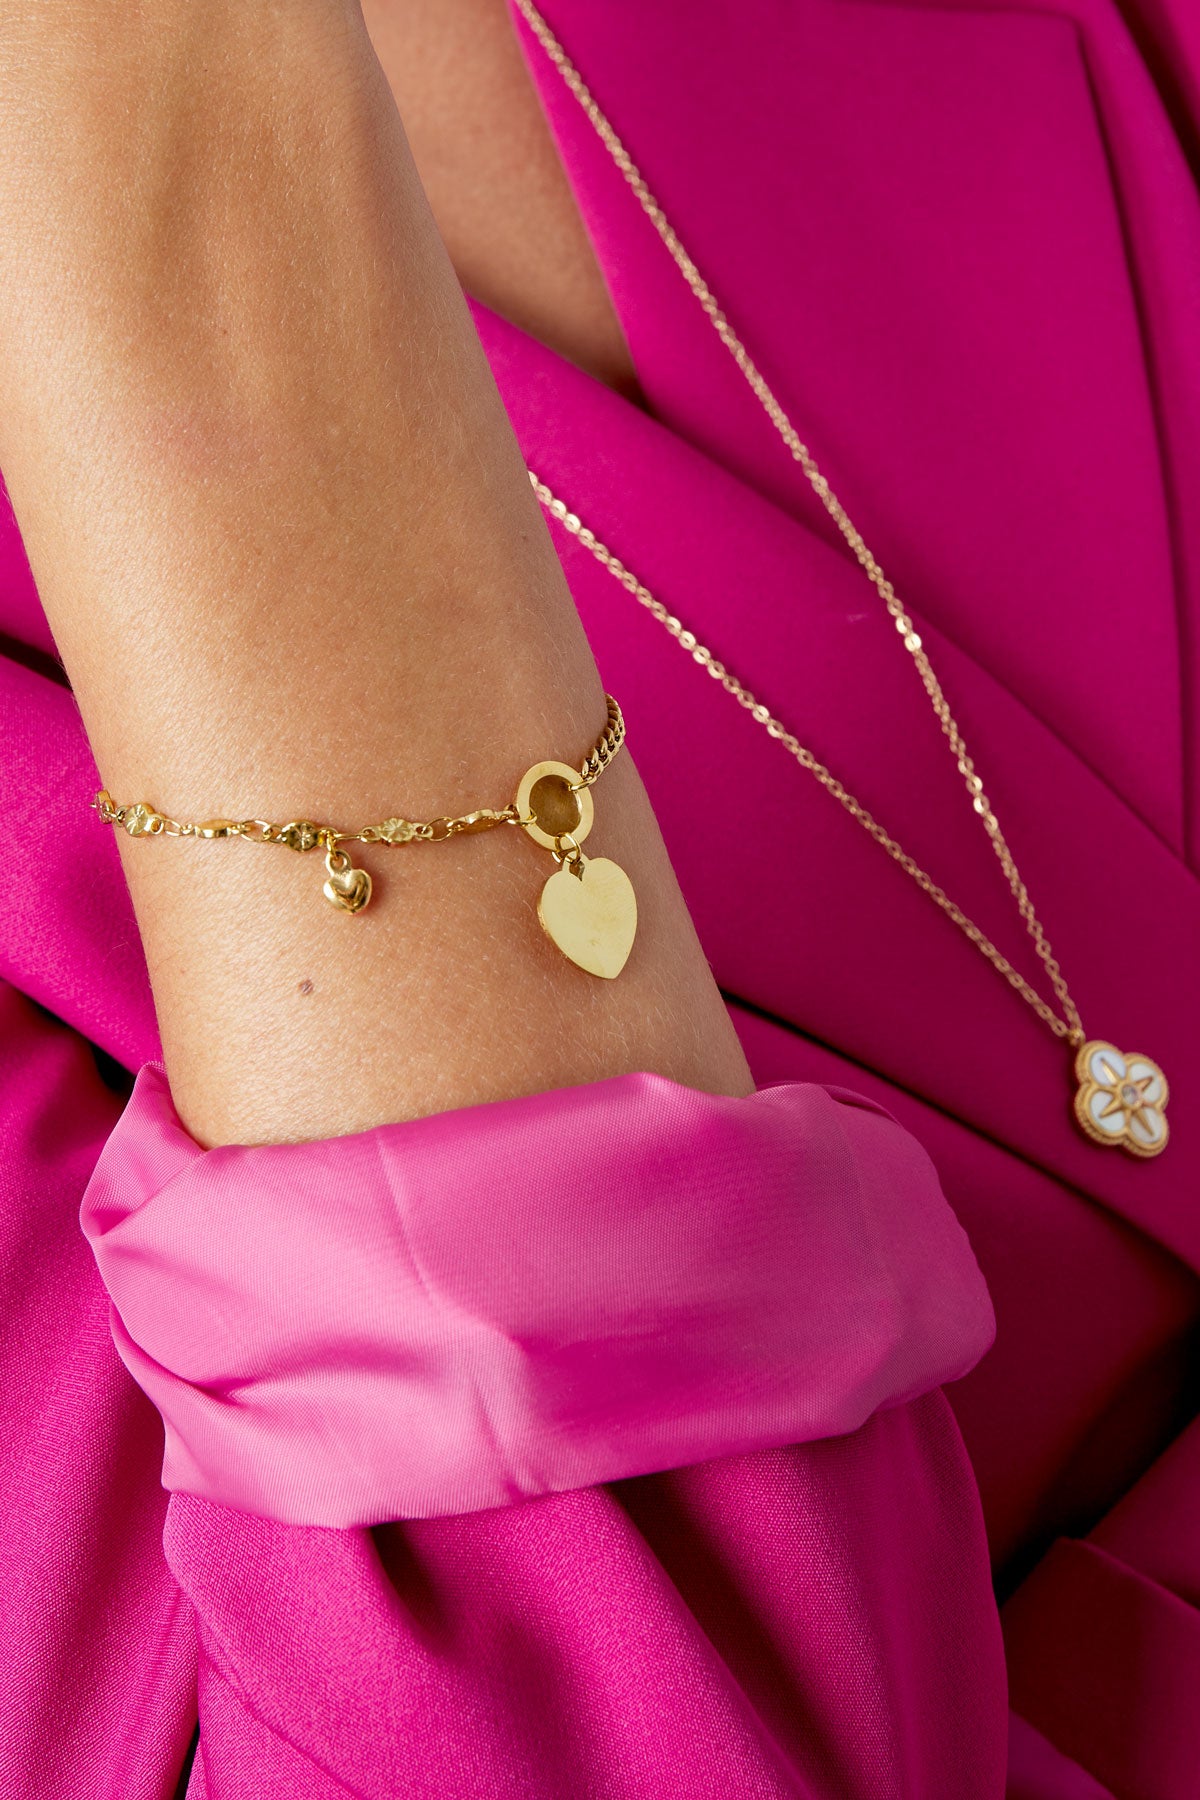 Bracelet links with heart - gold